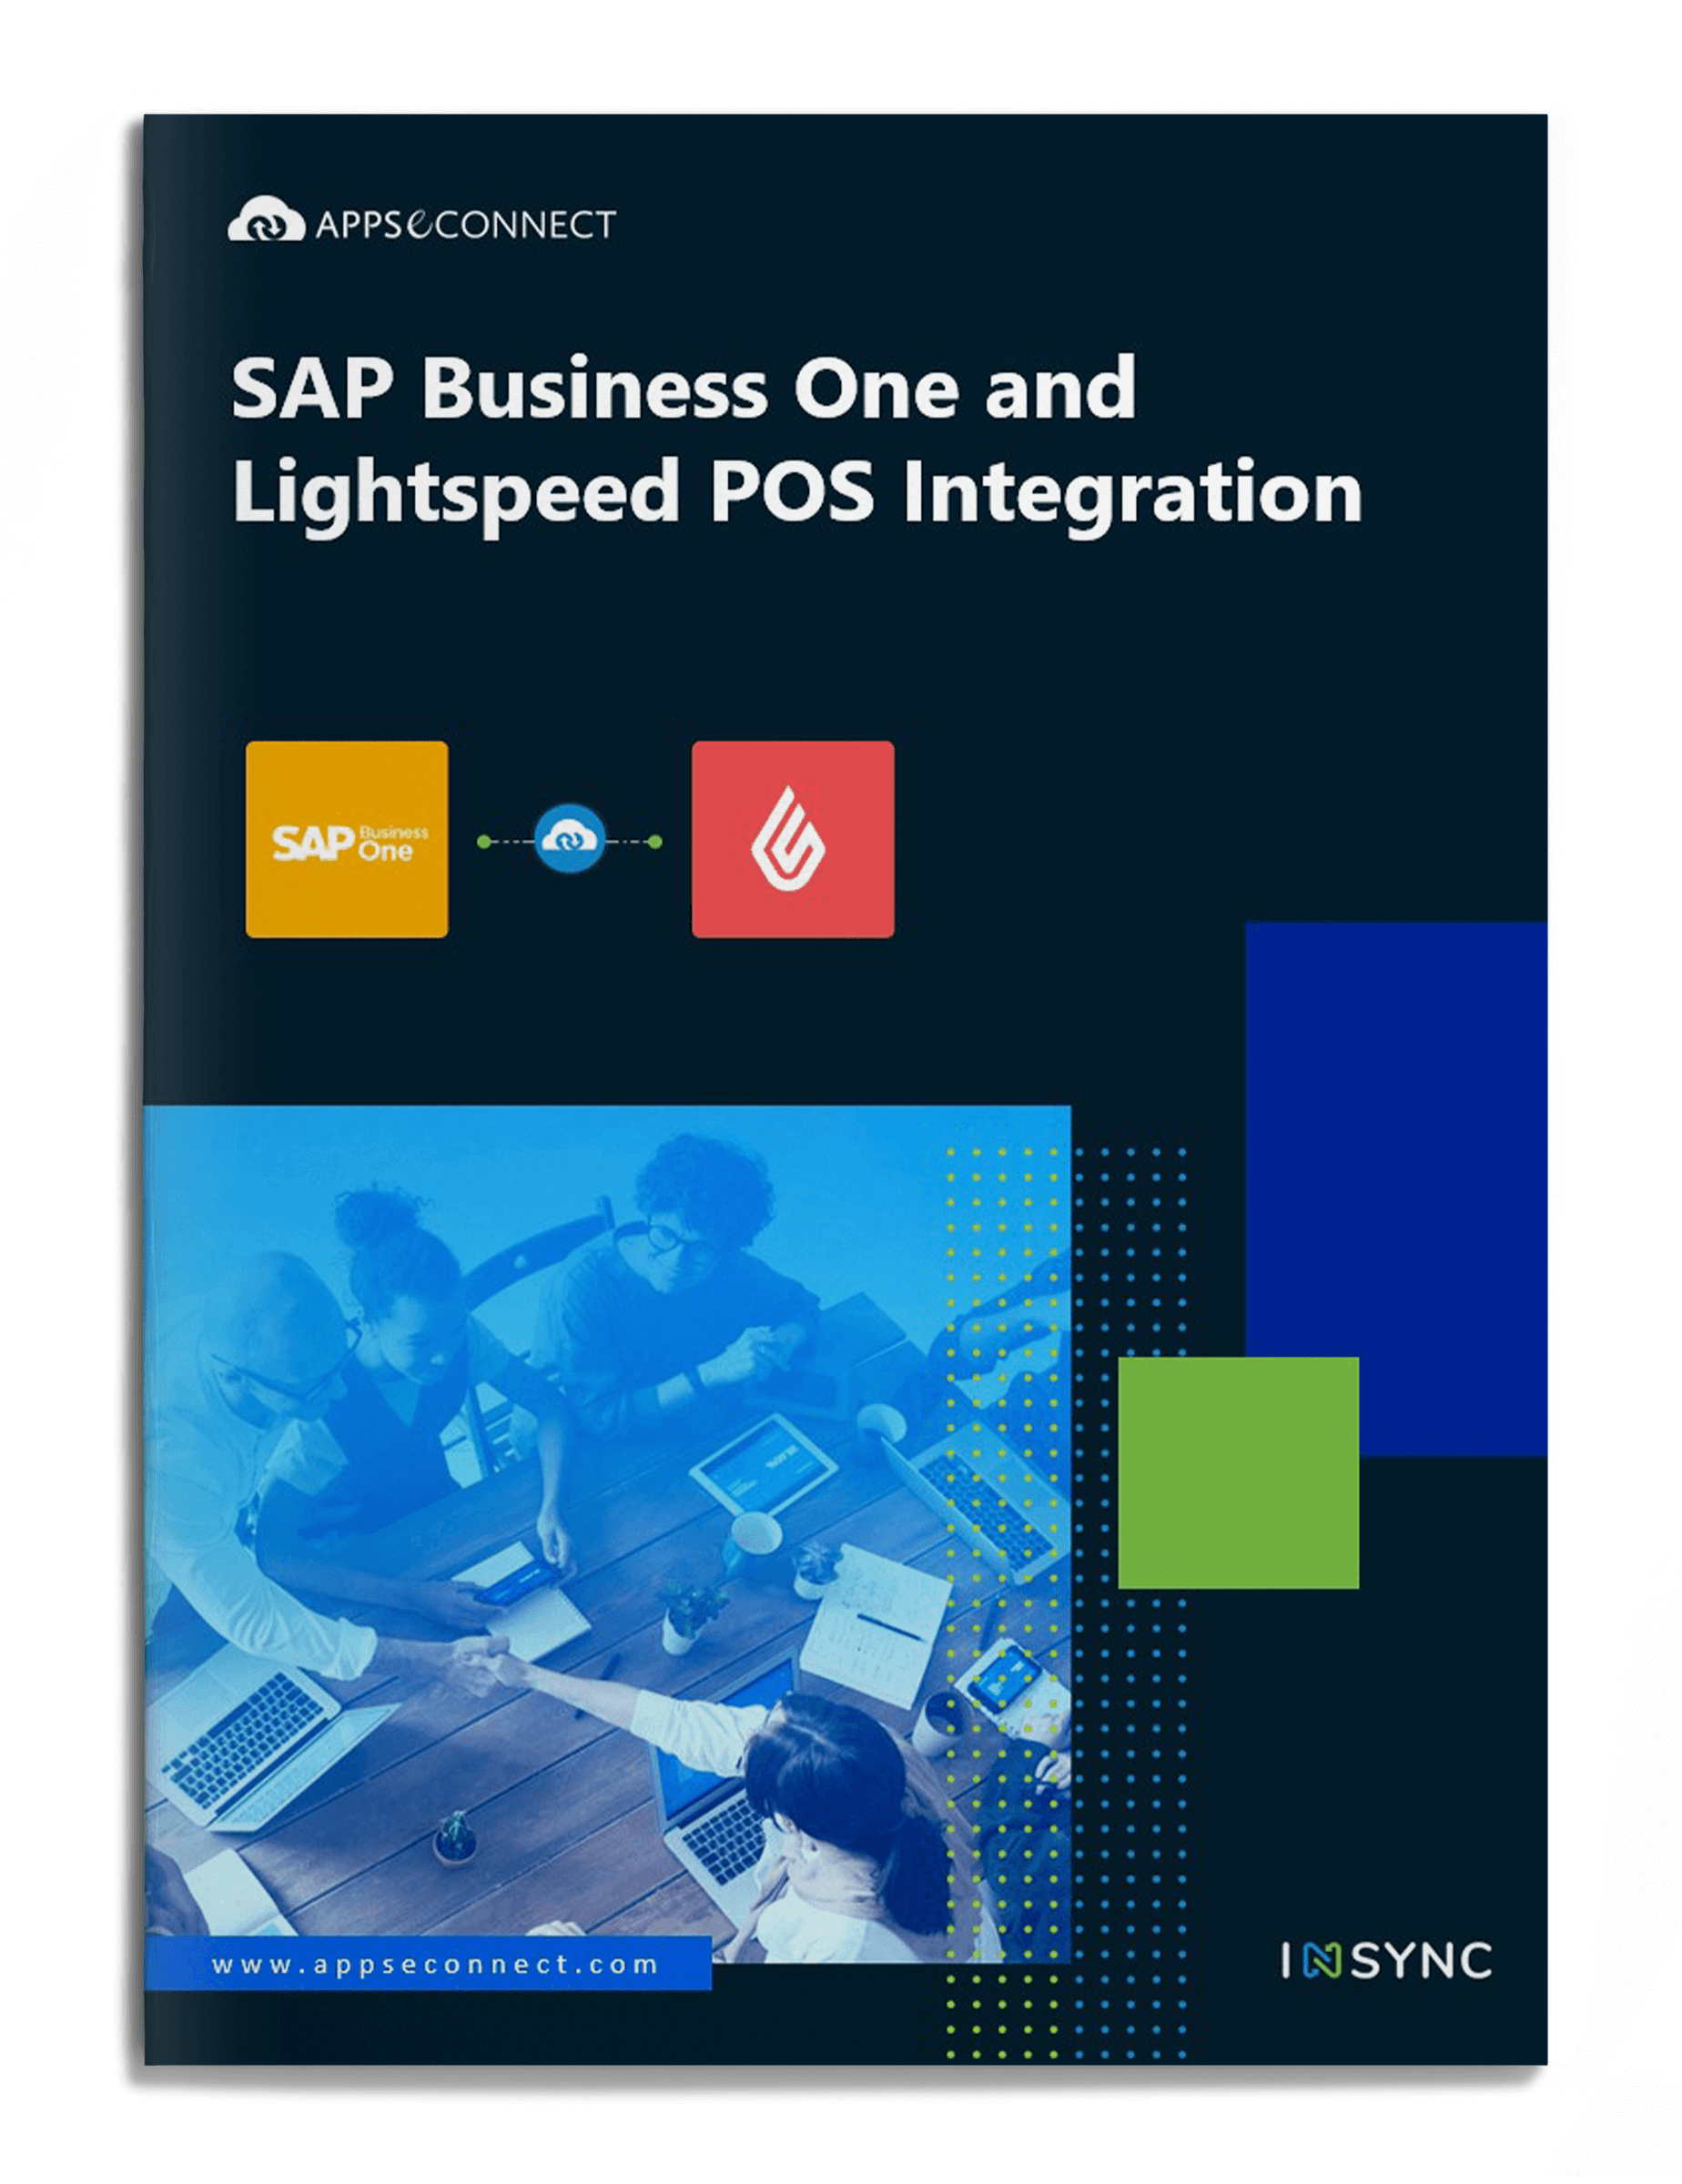 sap-business-one-lightspeed-integration-brochure-cover.png